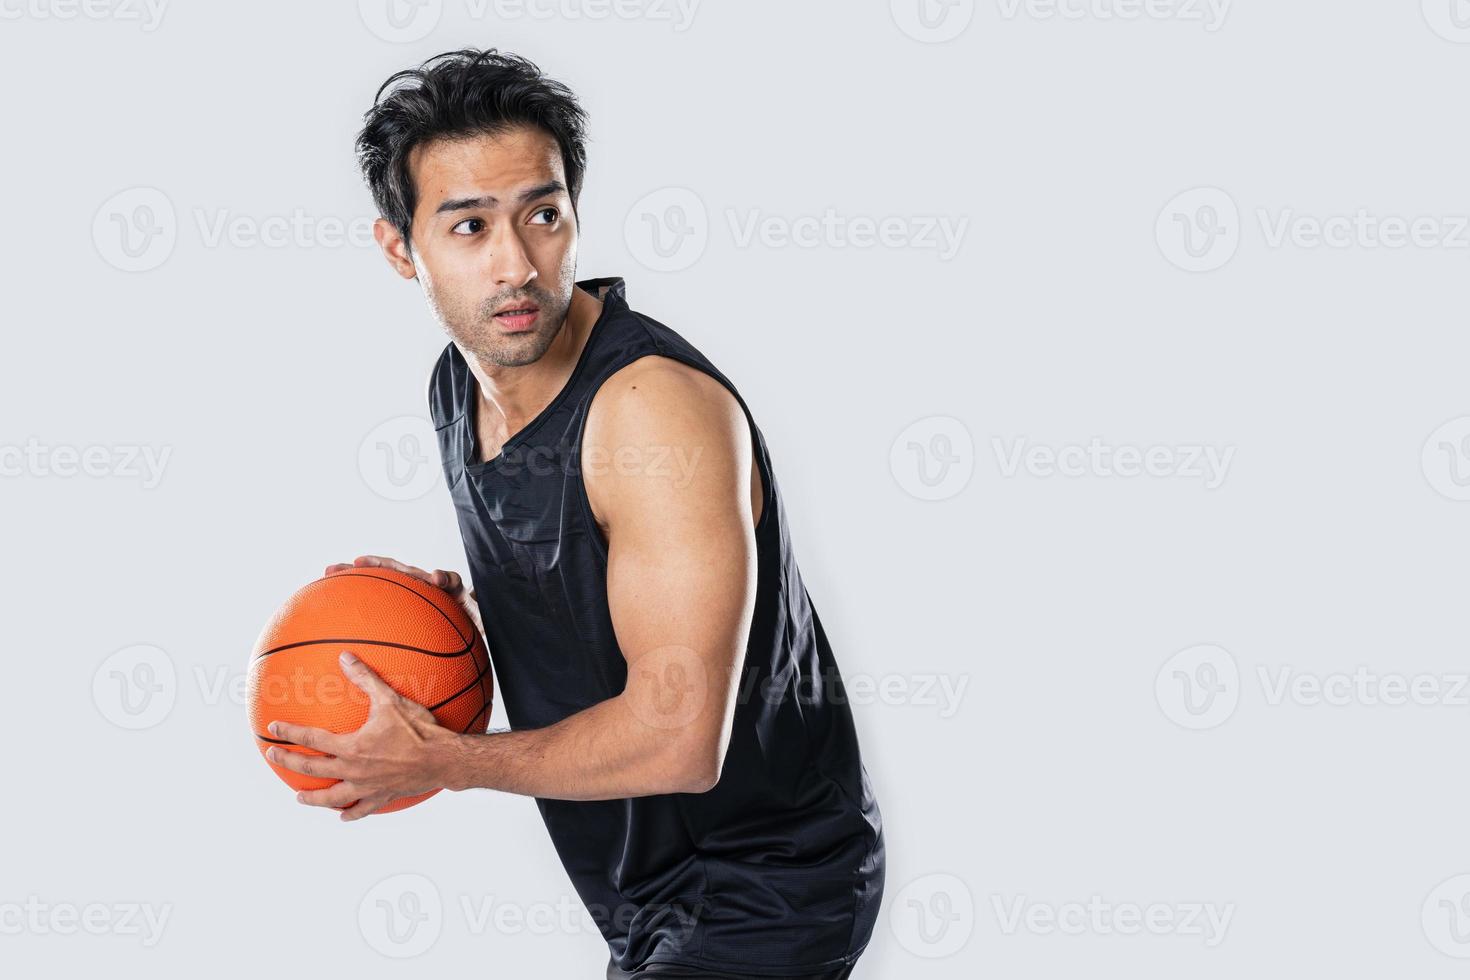 mannetje basketbal speler vervelend sportkleding Holding basketbal Aan wit achtergrond. foto